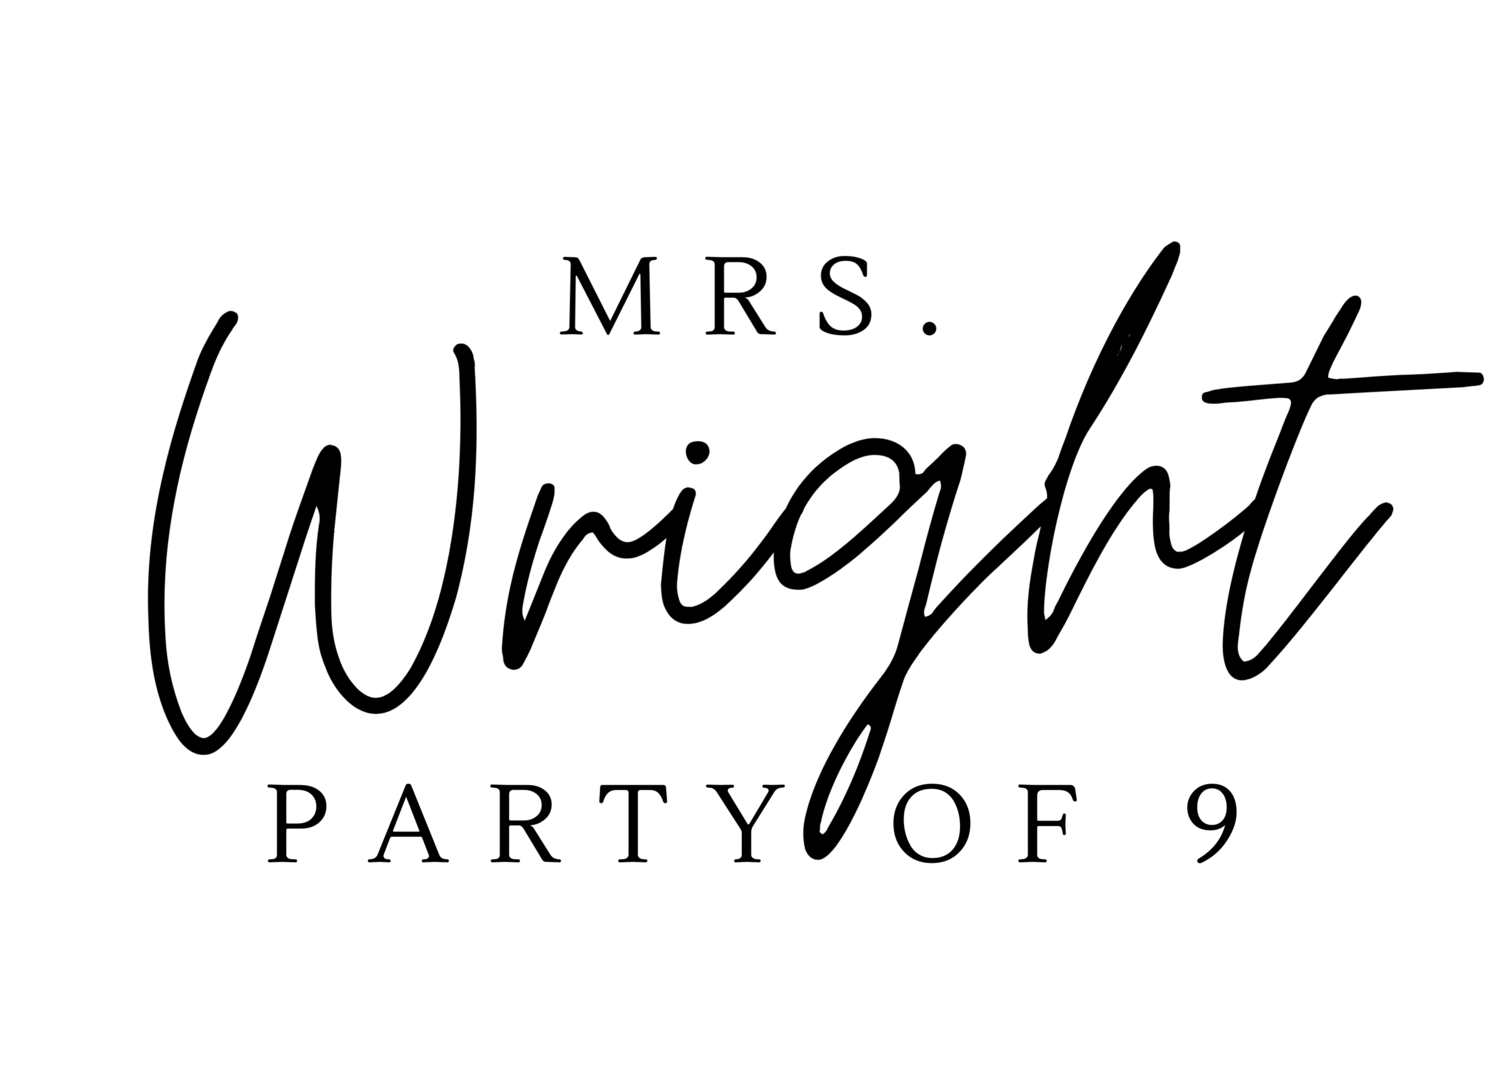 MrsWrightPartyof9